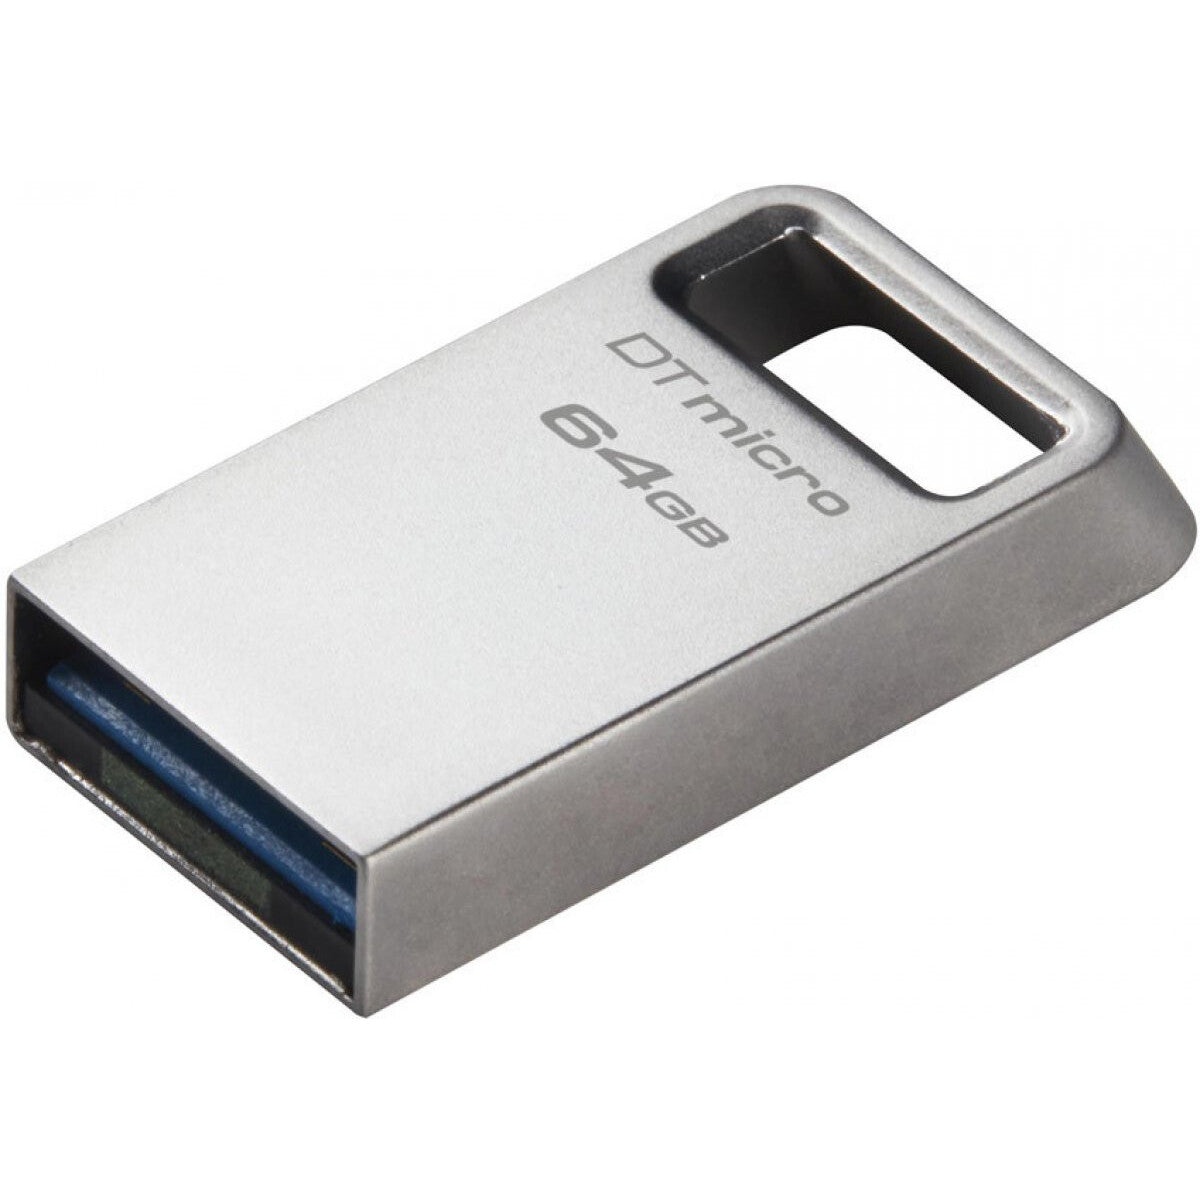 Flash disk Kingston DT Micro 64GB, 200MB/s, USB-A